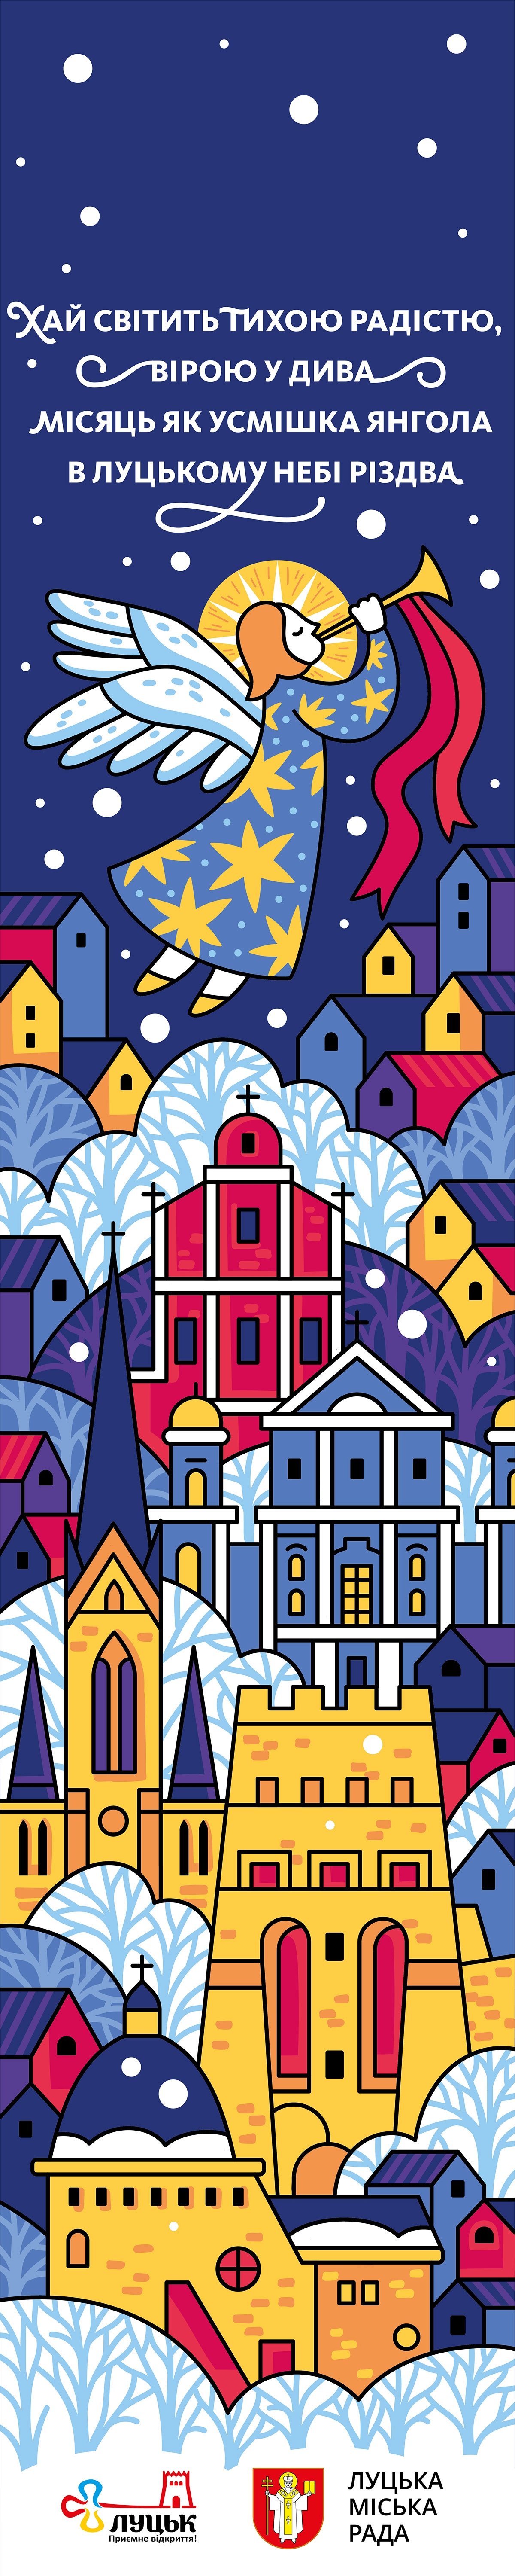 Christmas winter banner cityscape illustration Lutsk Ukraine with angel and houses on winter